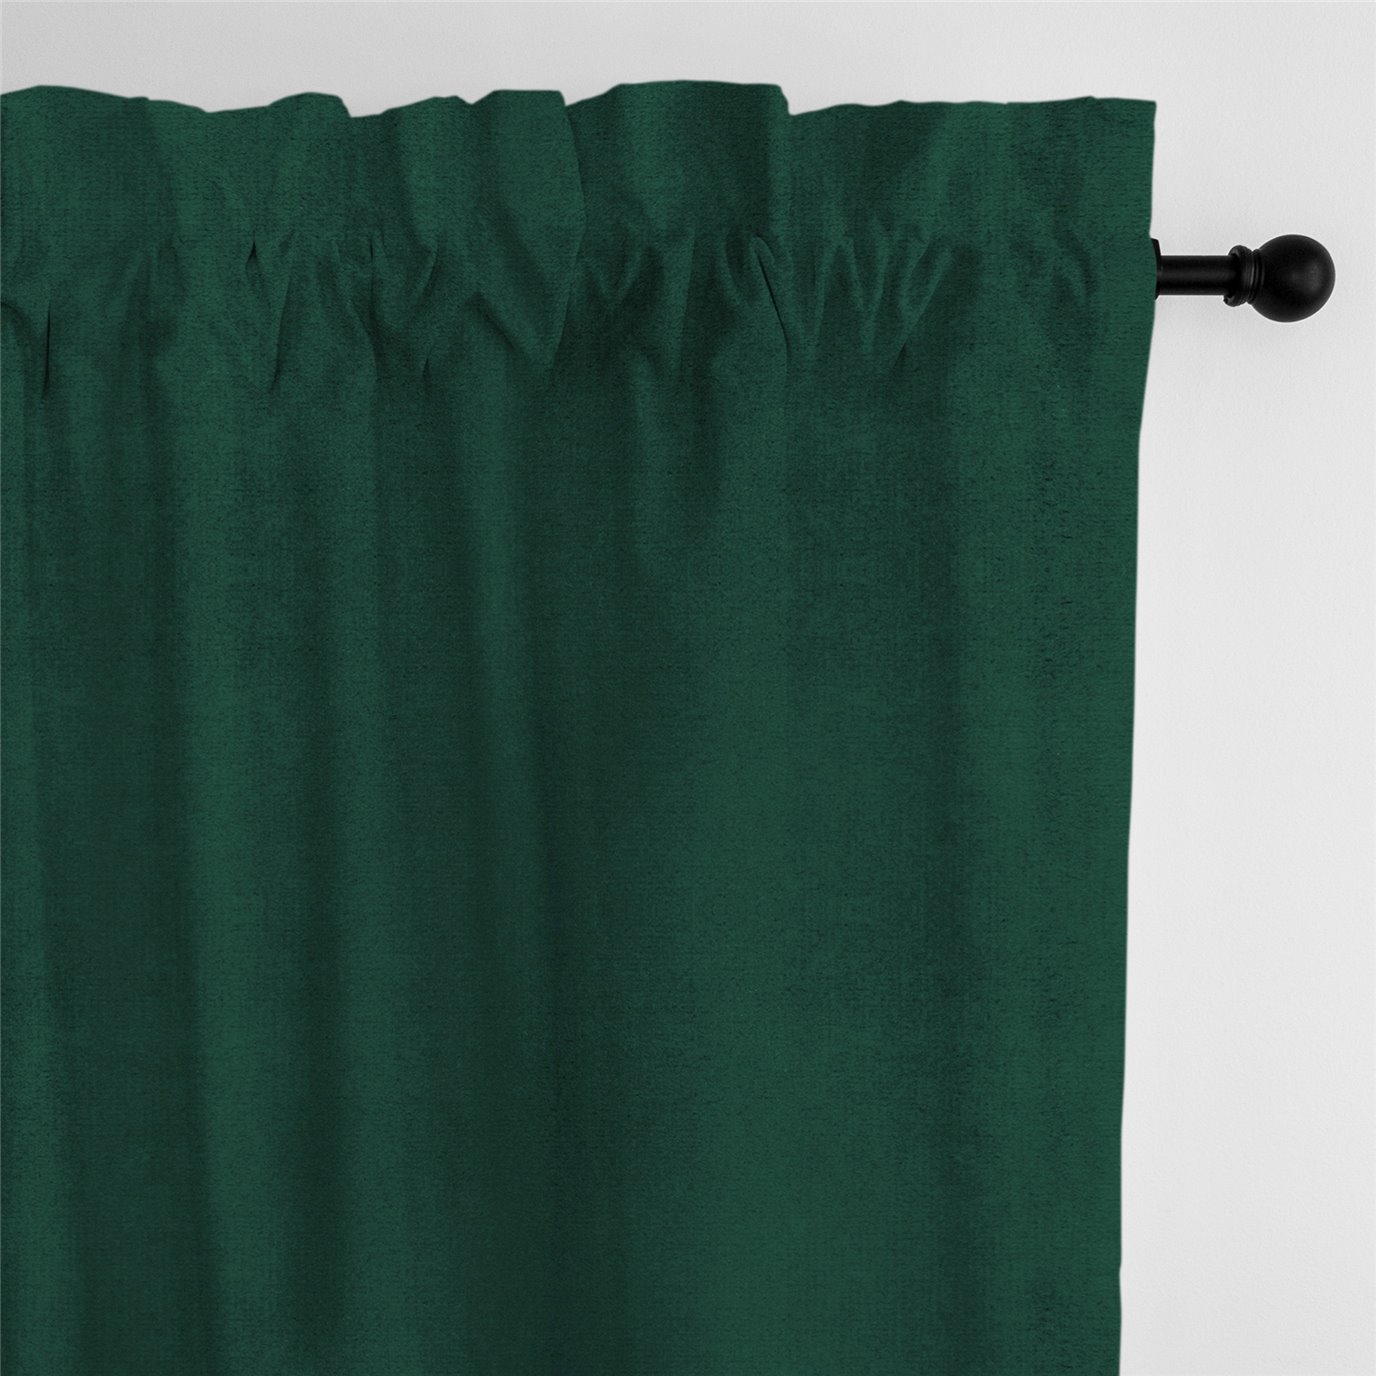 Vanessa Emerald Pole Top Drapery Panel - Pair - Size 50"x144"